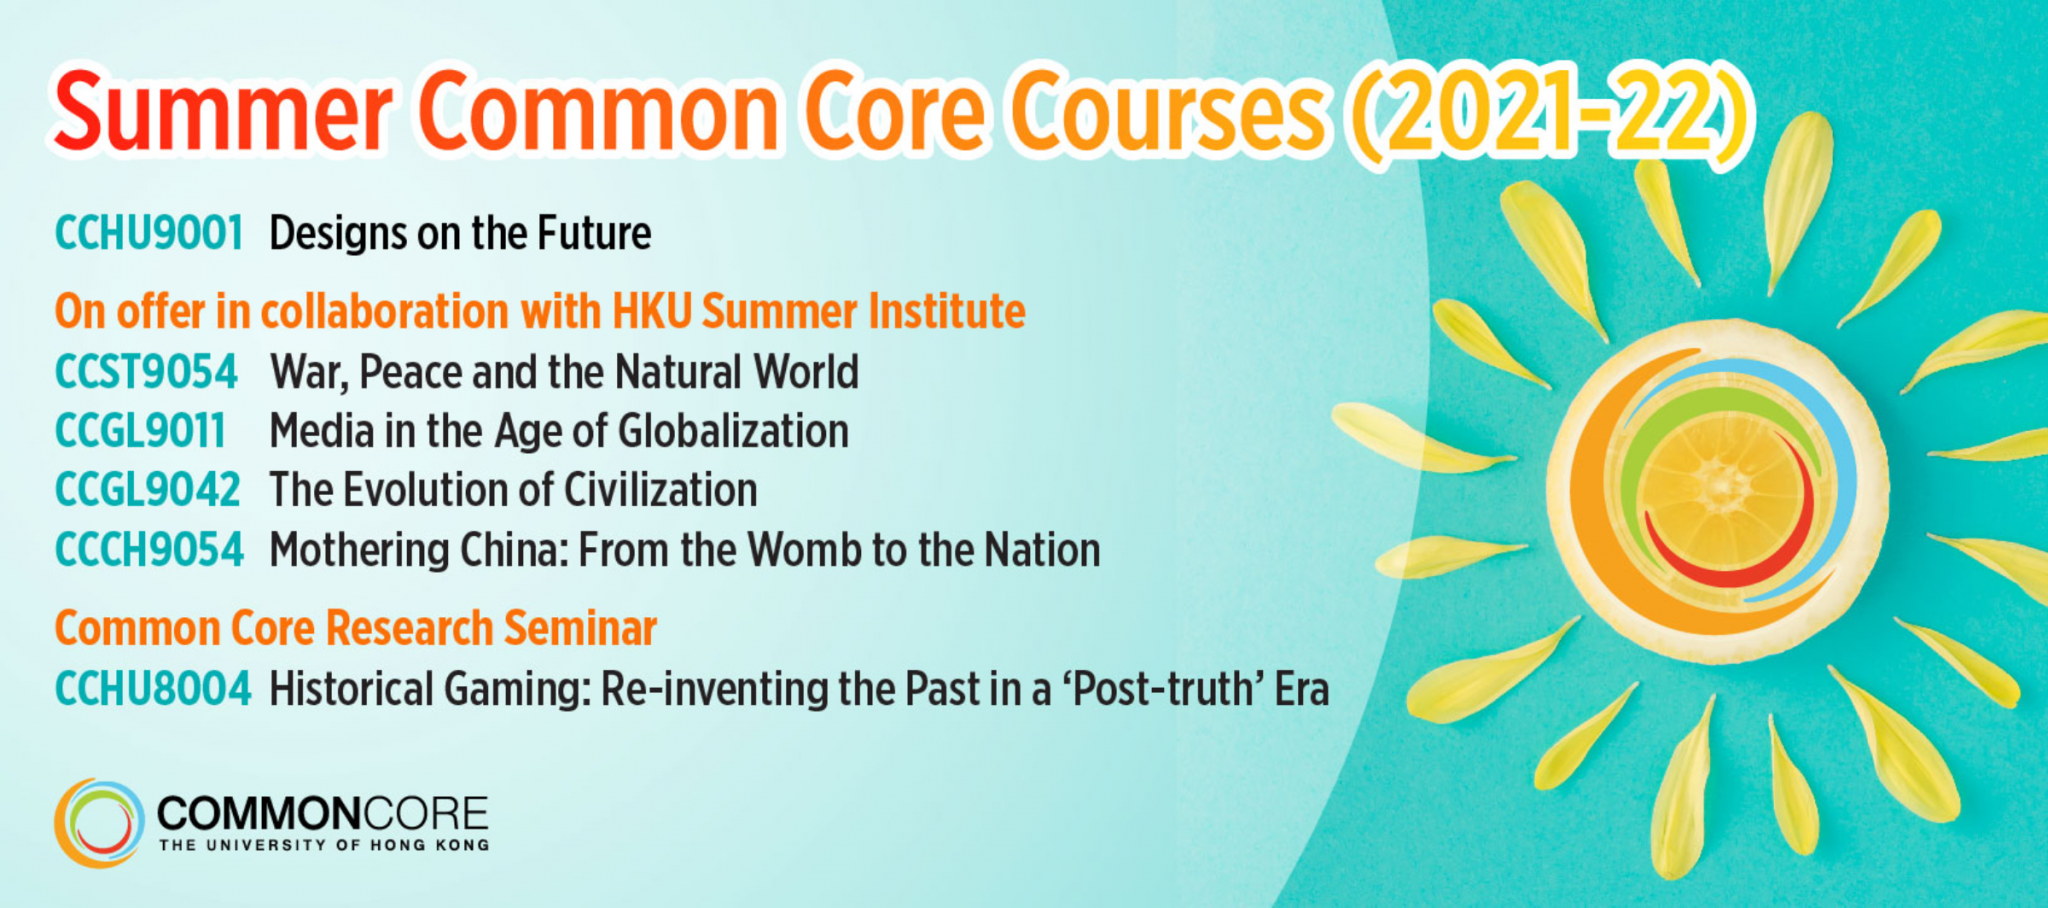 cc_Summer-courses-2022-long-01